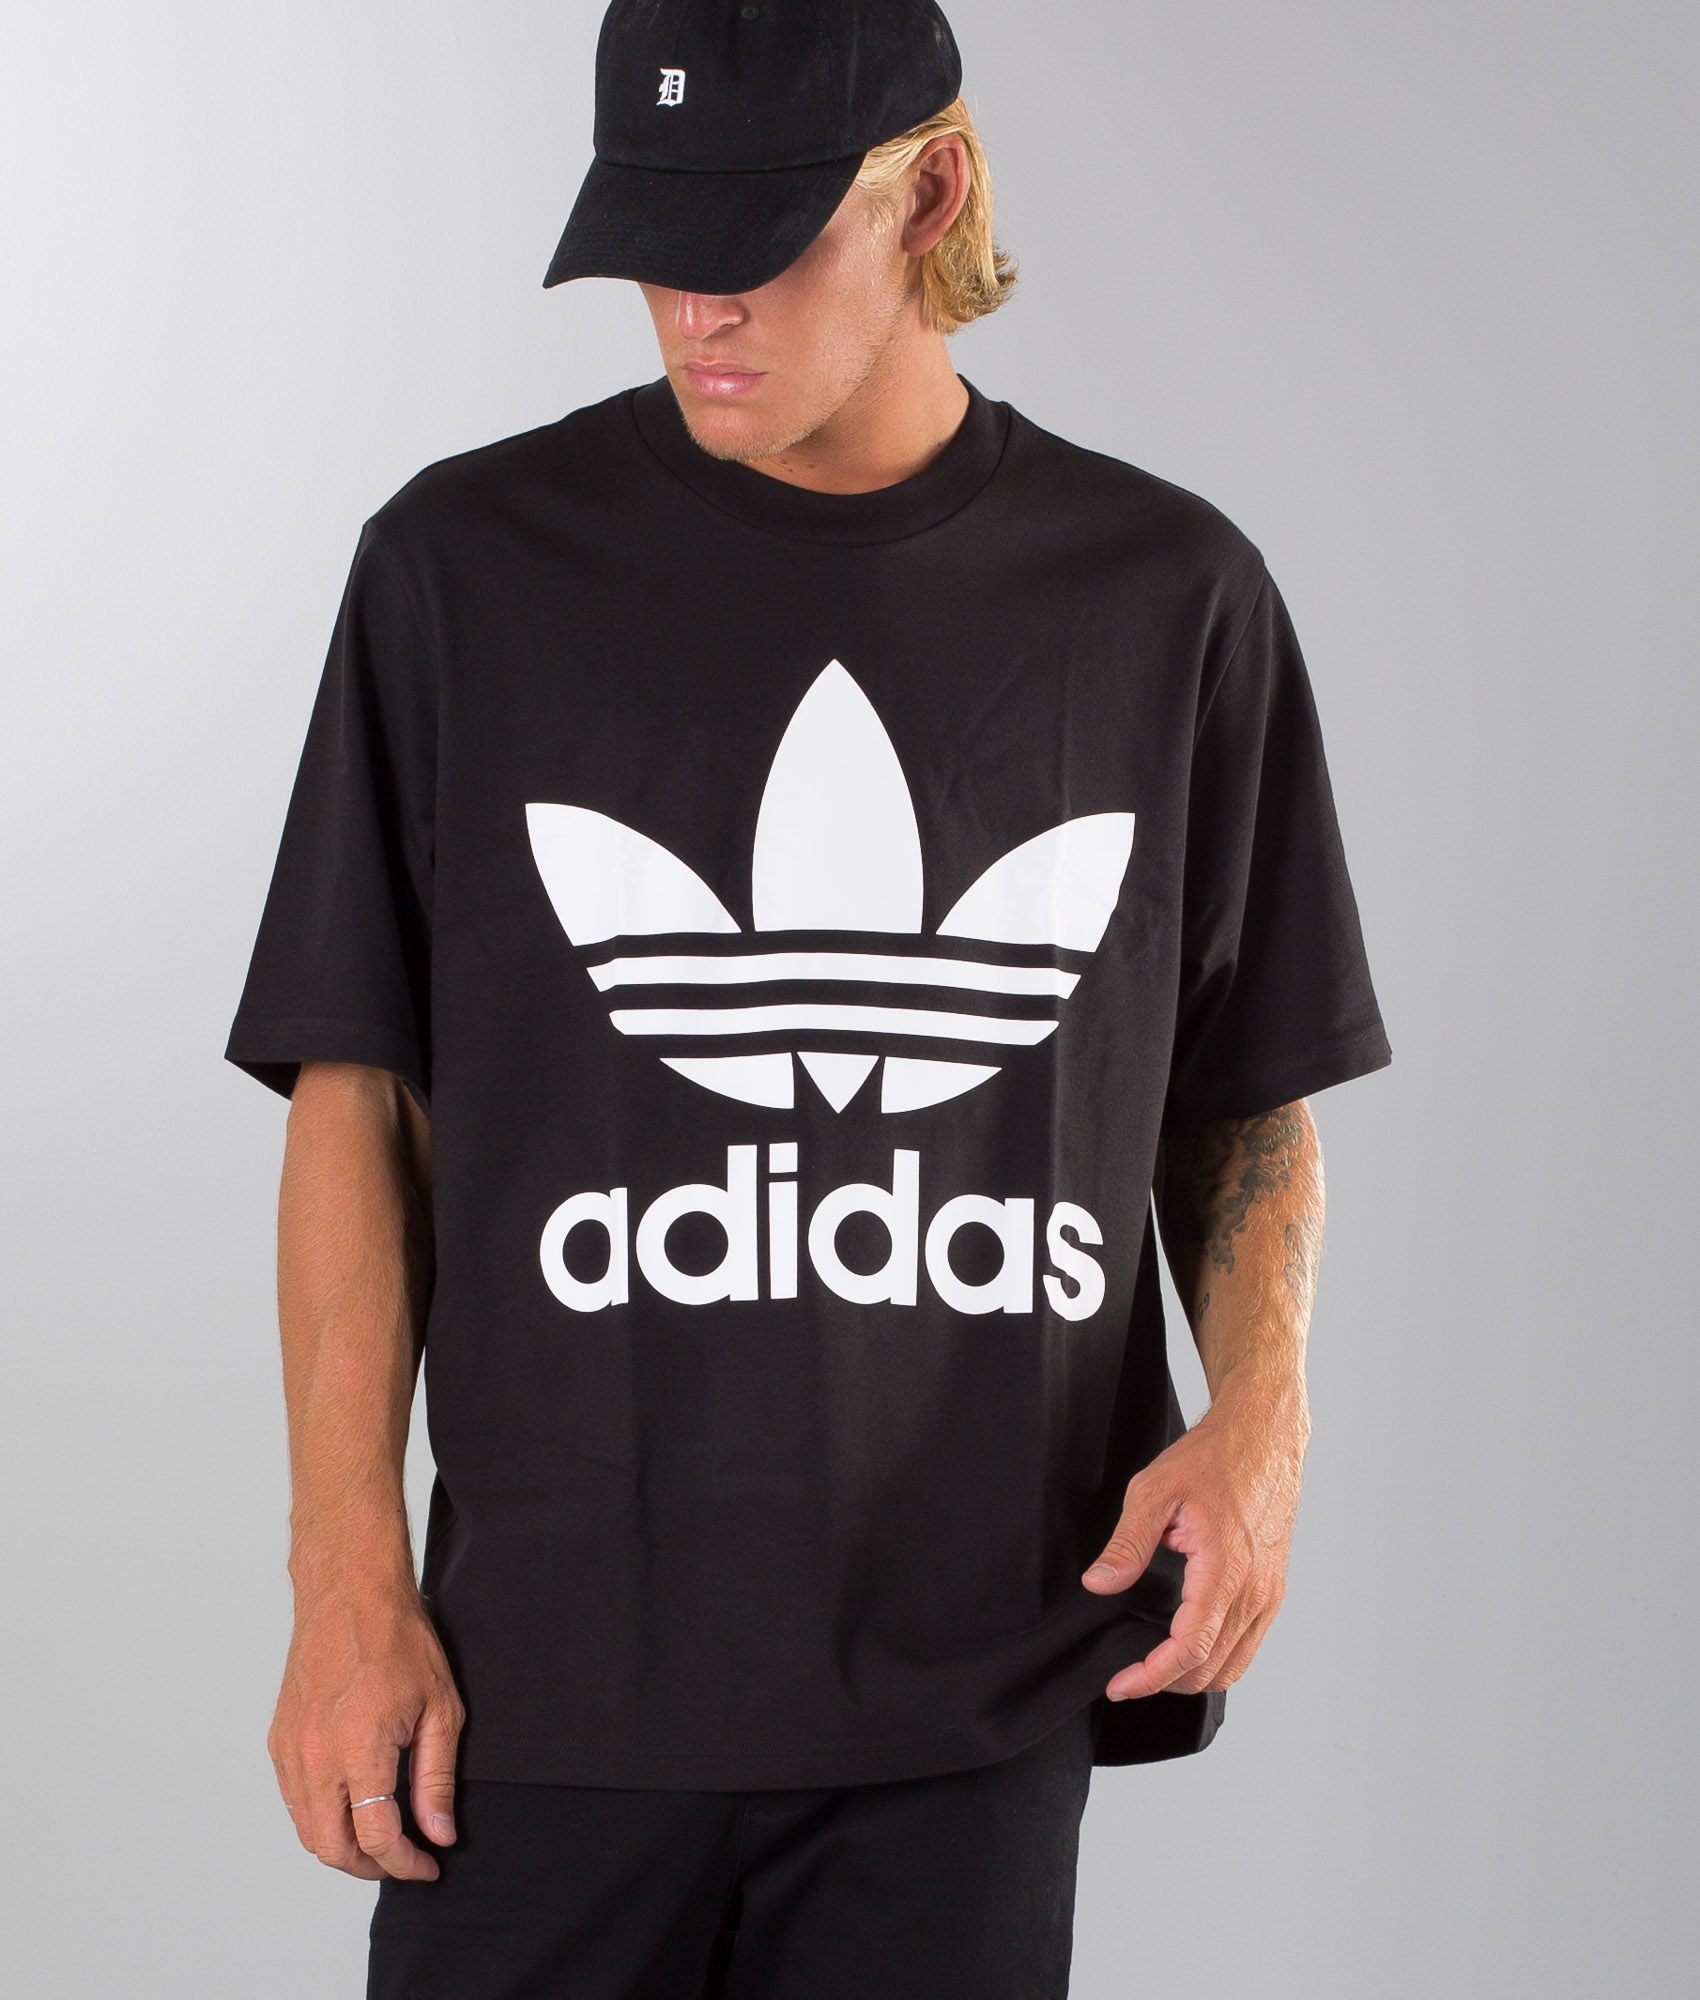 adidas trefoil oversized t shirt